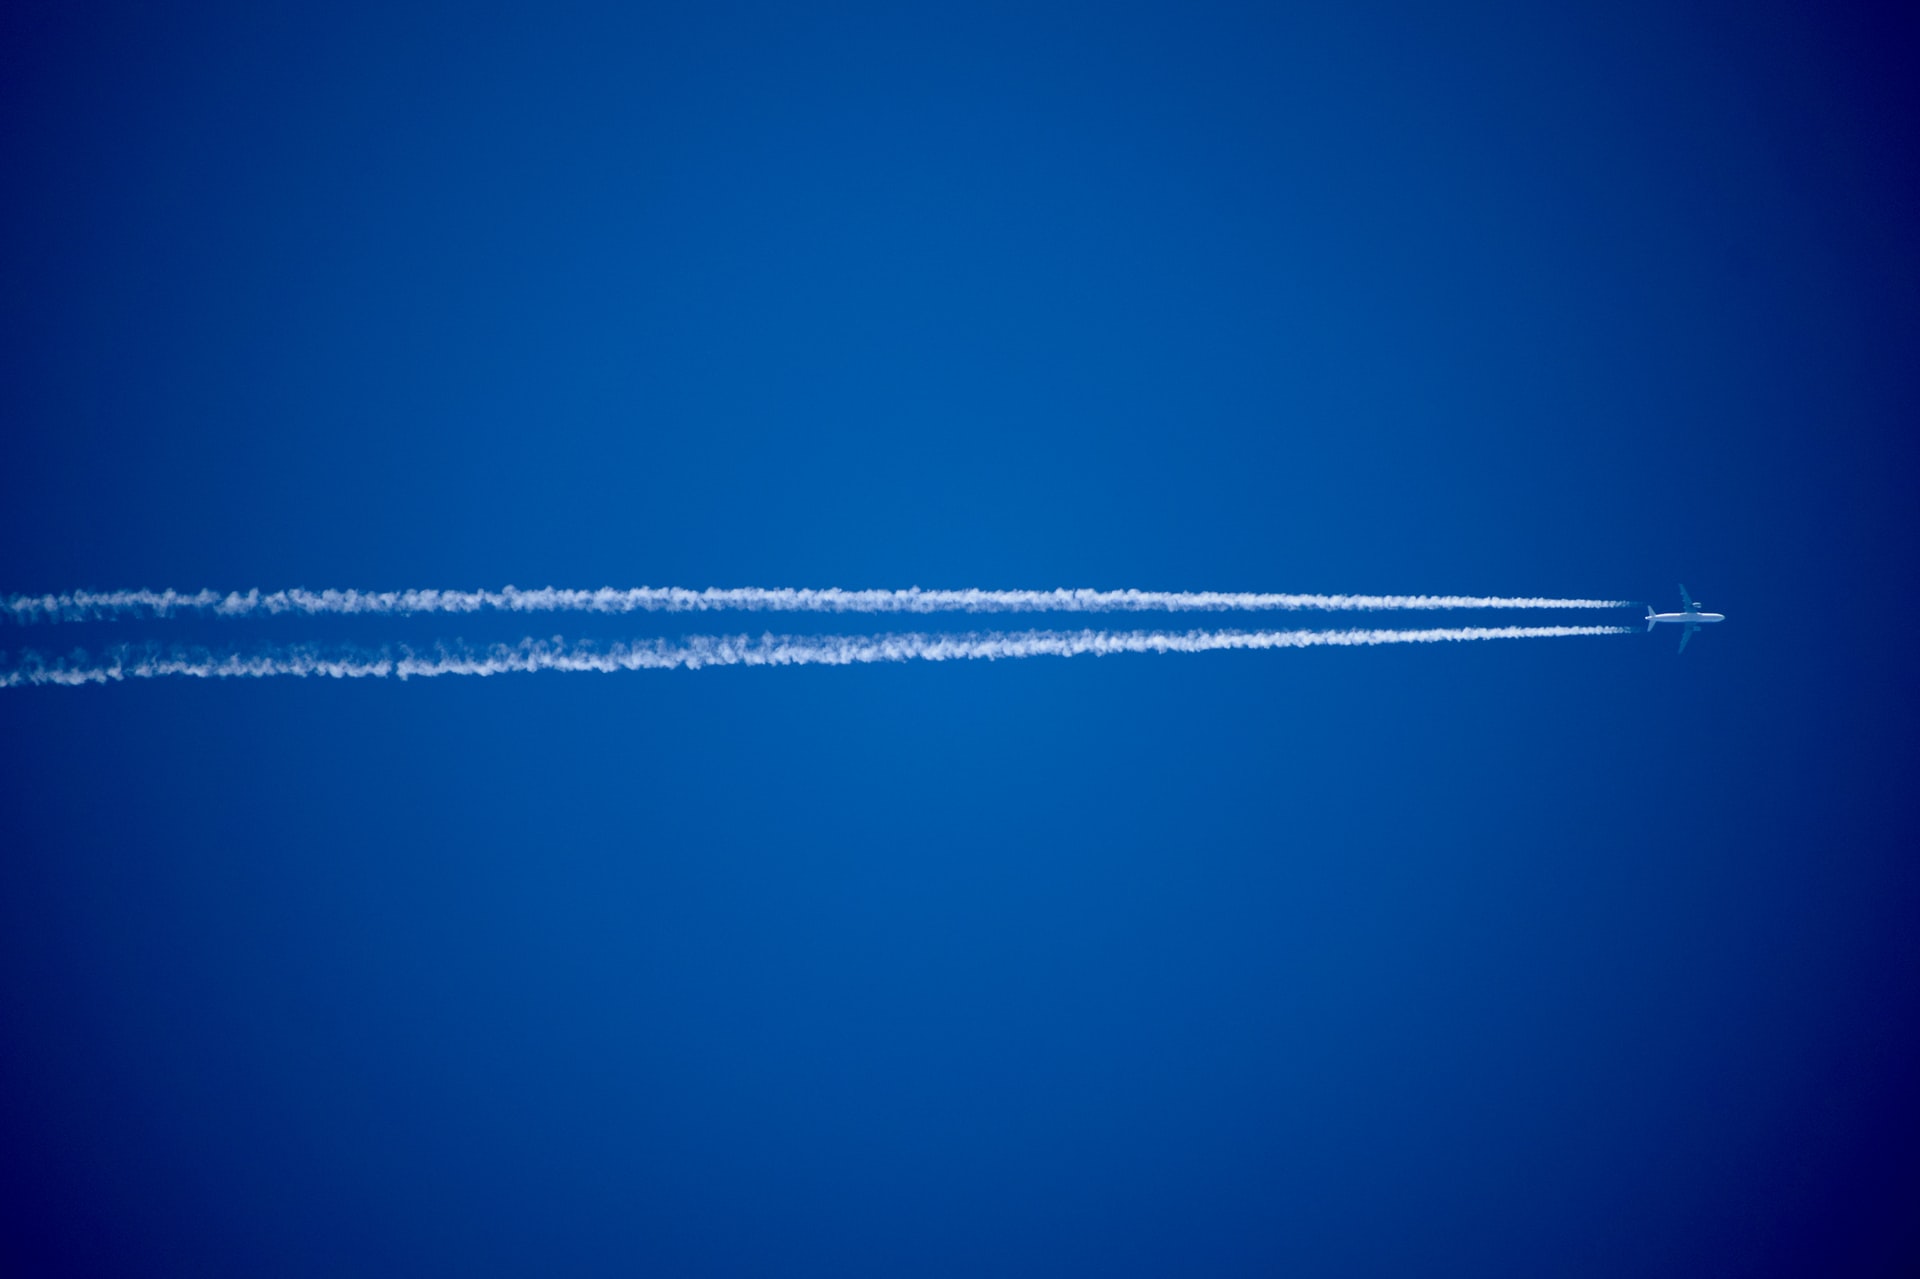 Google Flights now lets you see estimated carbon emissions for planned flights